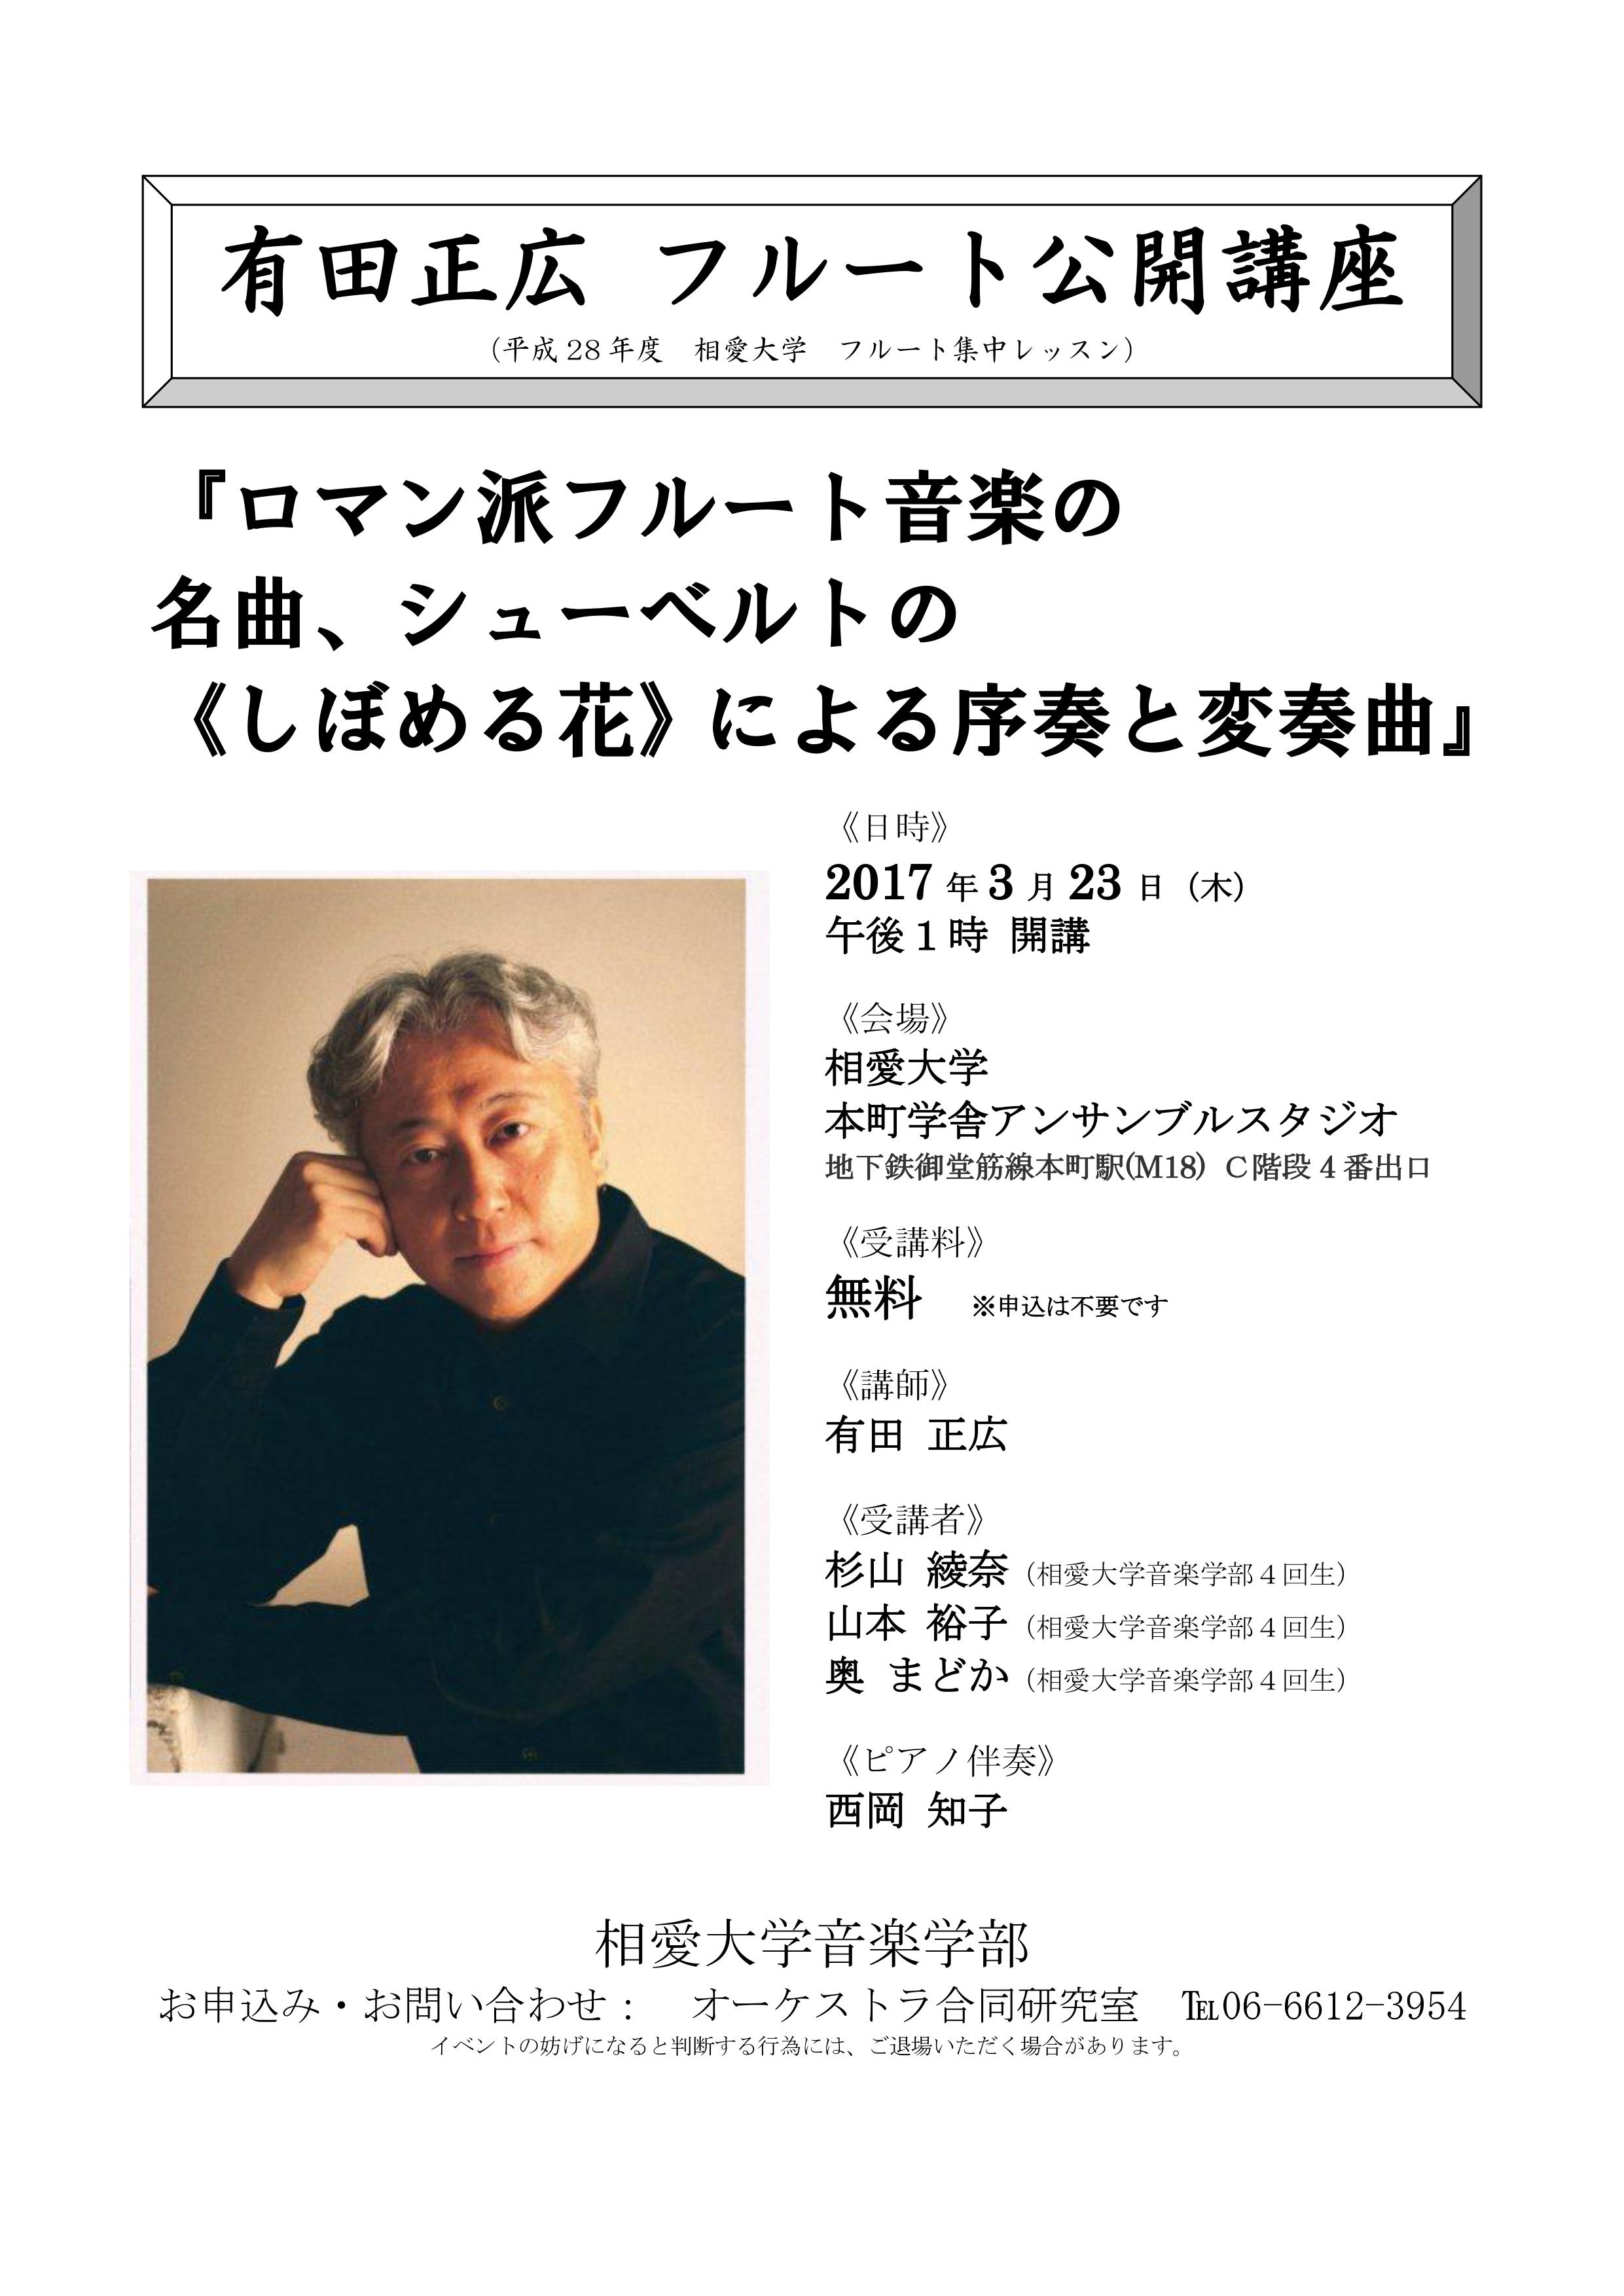 http://www.soai.ac.jp/information/lecture/20170323_flut-openlecture2.jpg